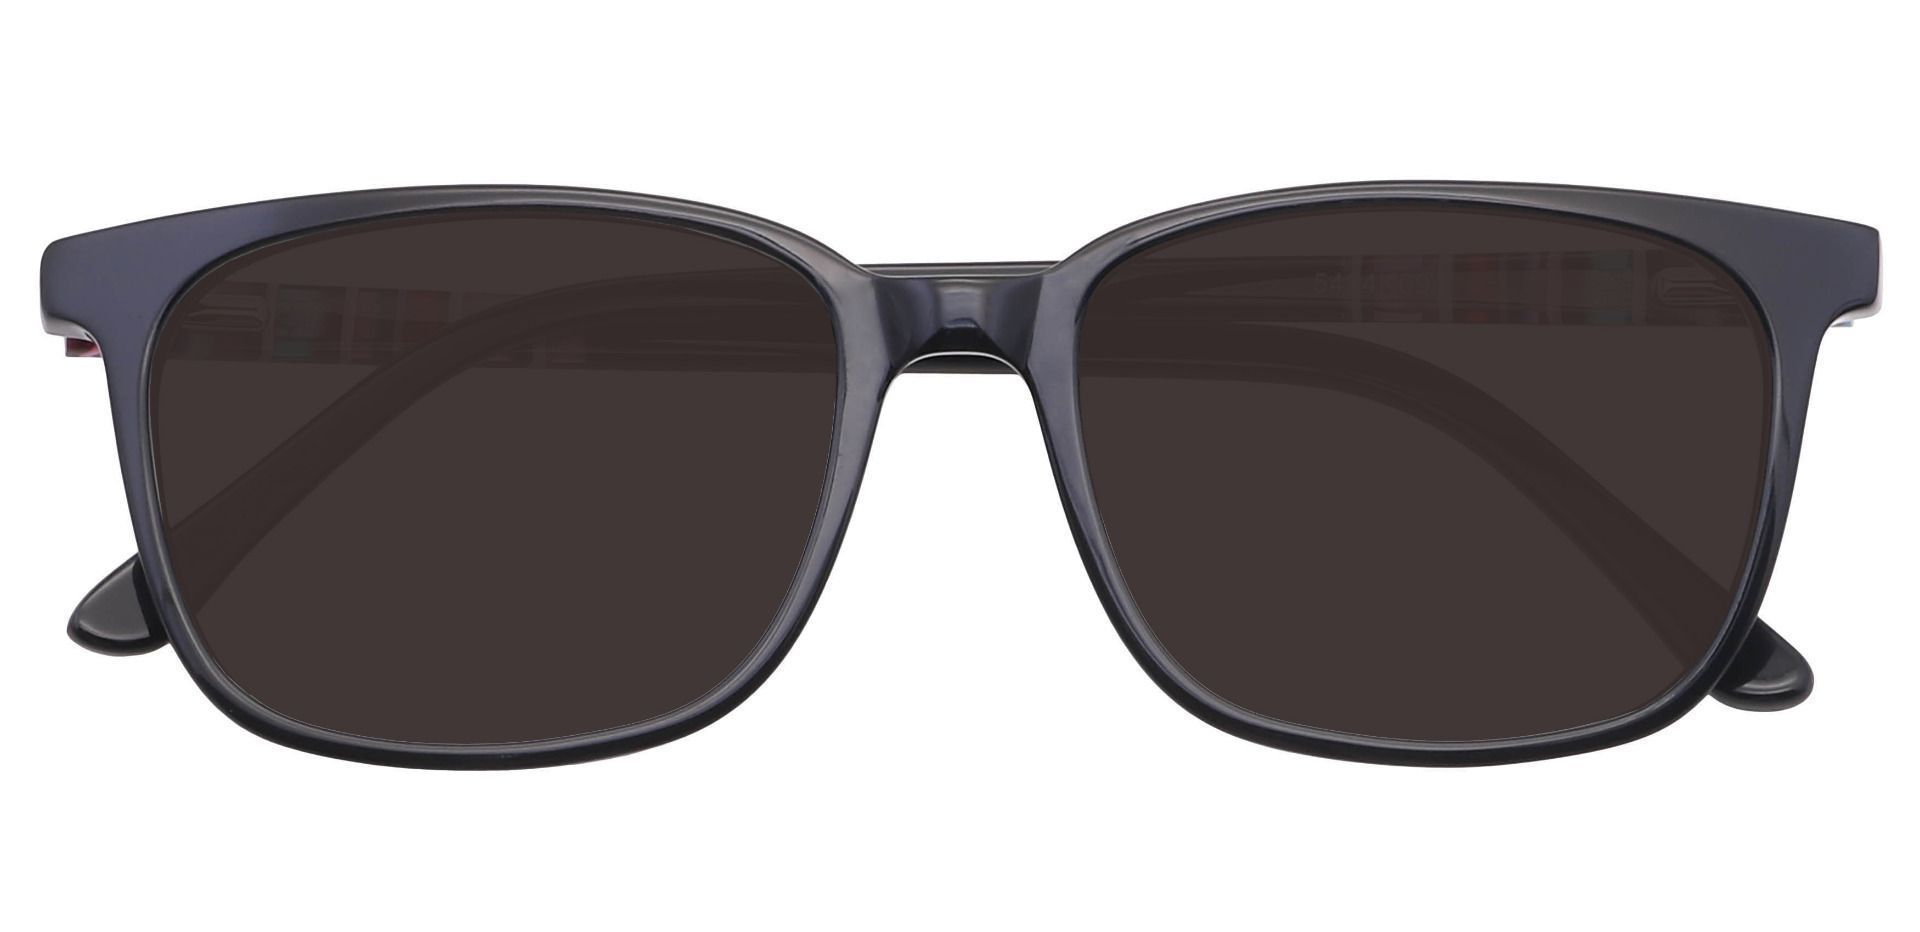 Fern Square Non-Rx Sunglasses - Black Frame With Gray Lenses